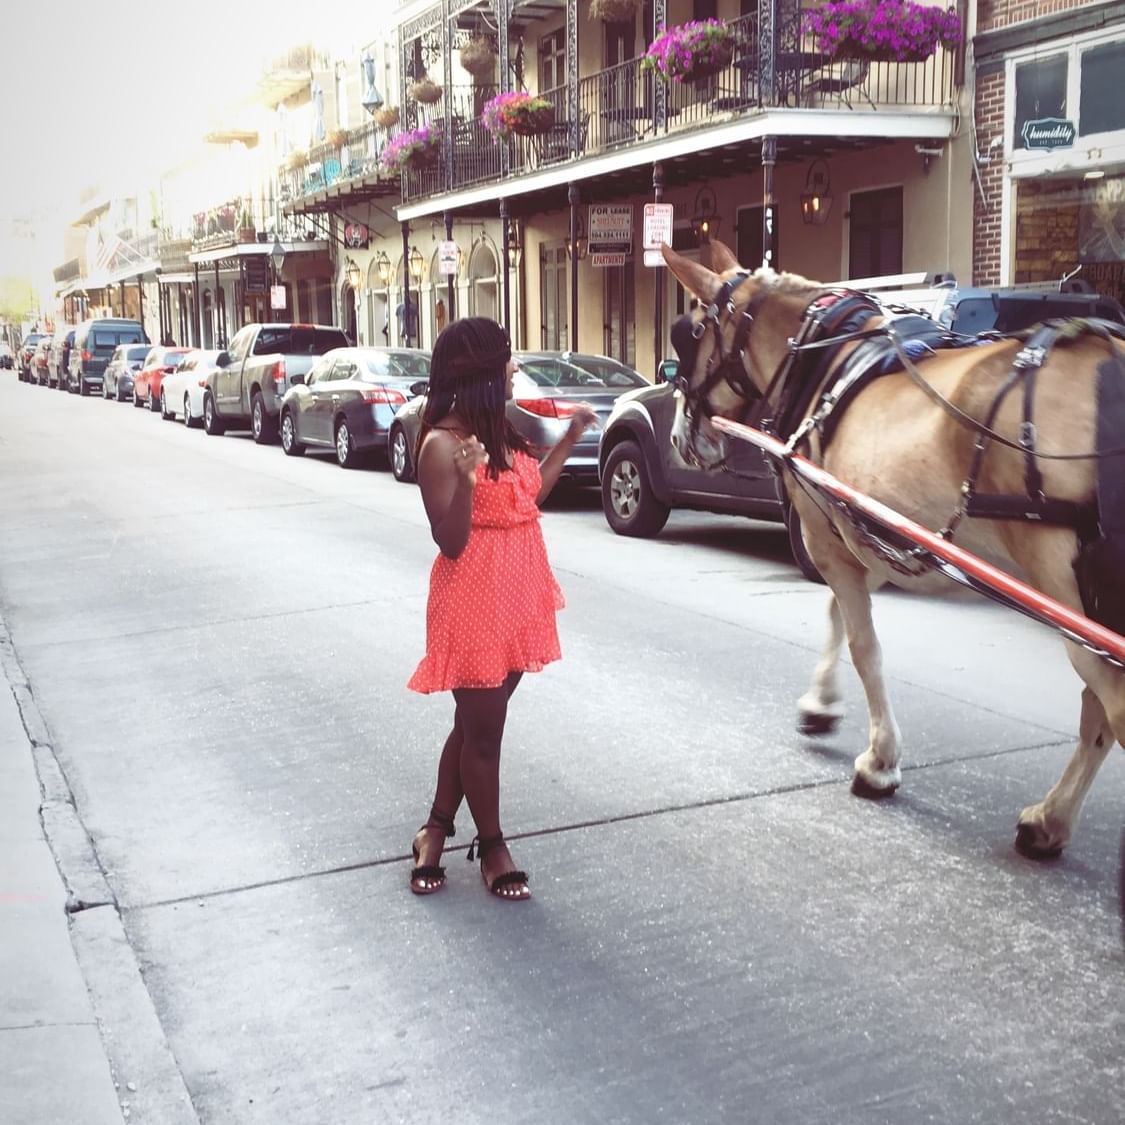 Lady posing by a horse in the street near La Galerie Hotel